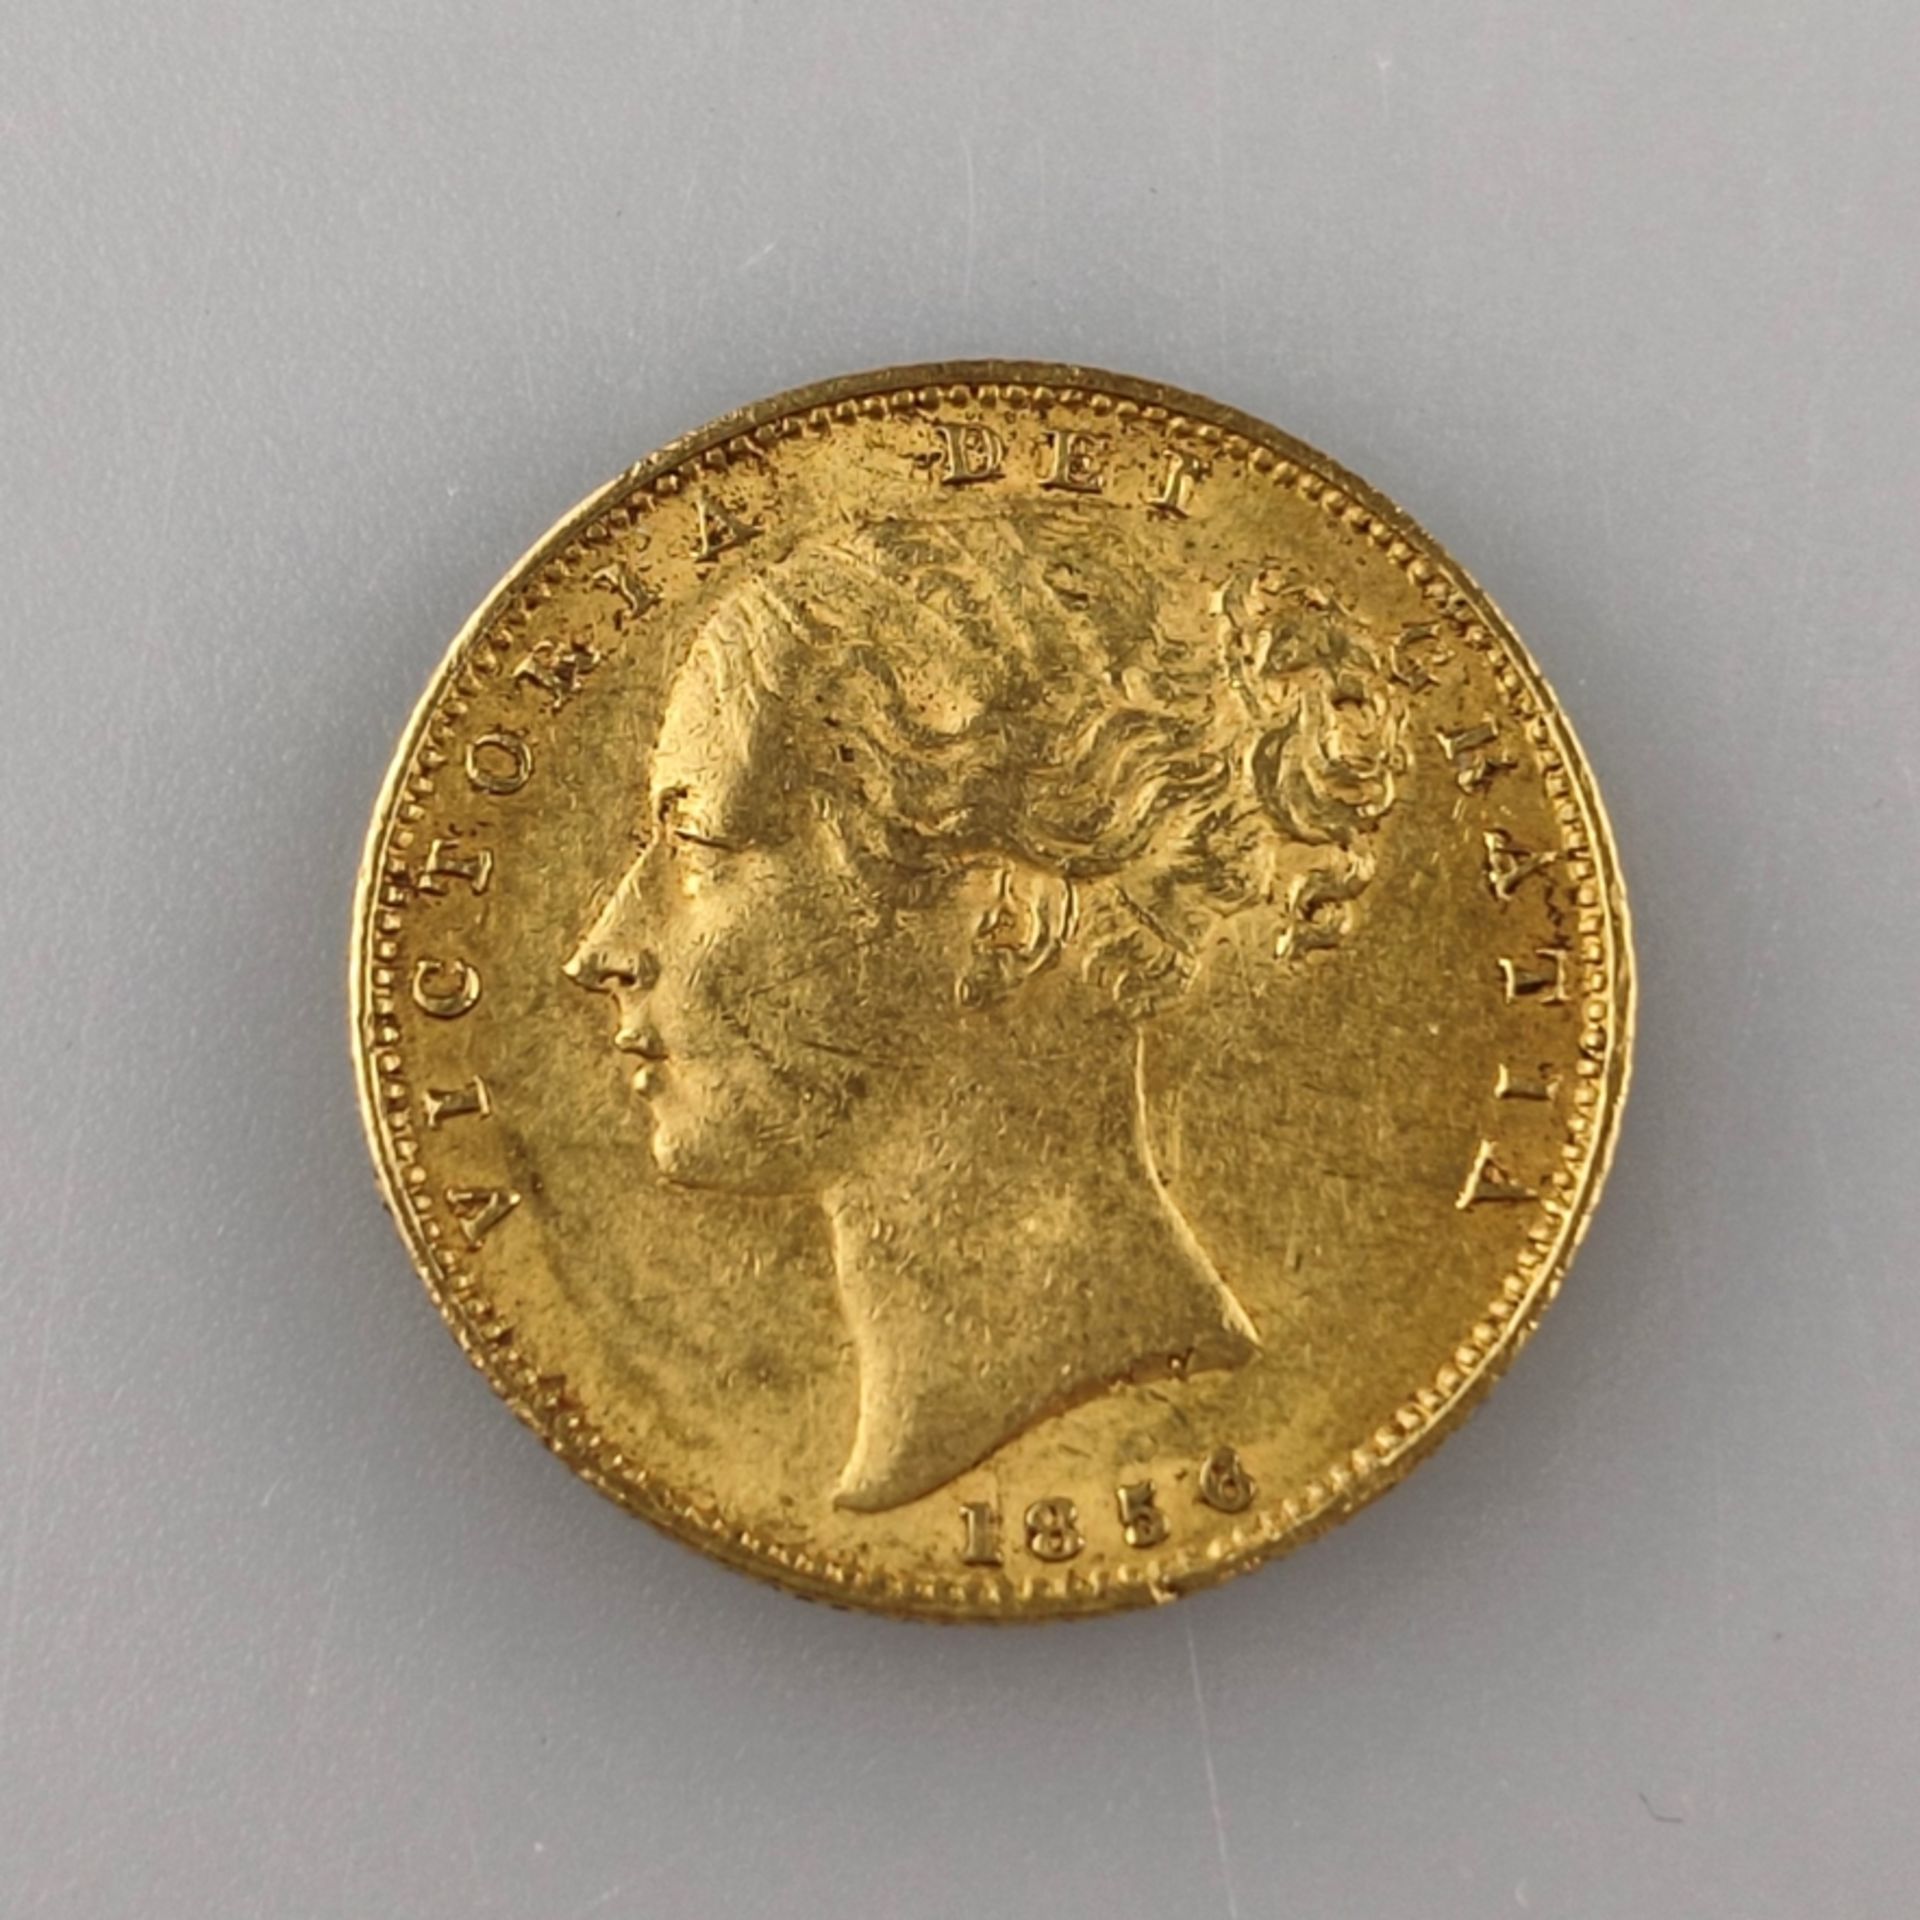 Goldmünze Sovereign "Young Head" 1856 - Großbritannien, Victoria dei gratia, Revers: Regina Fid Def